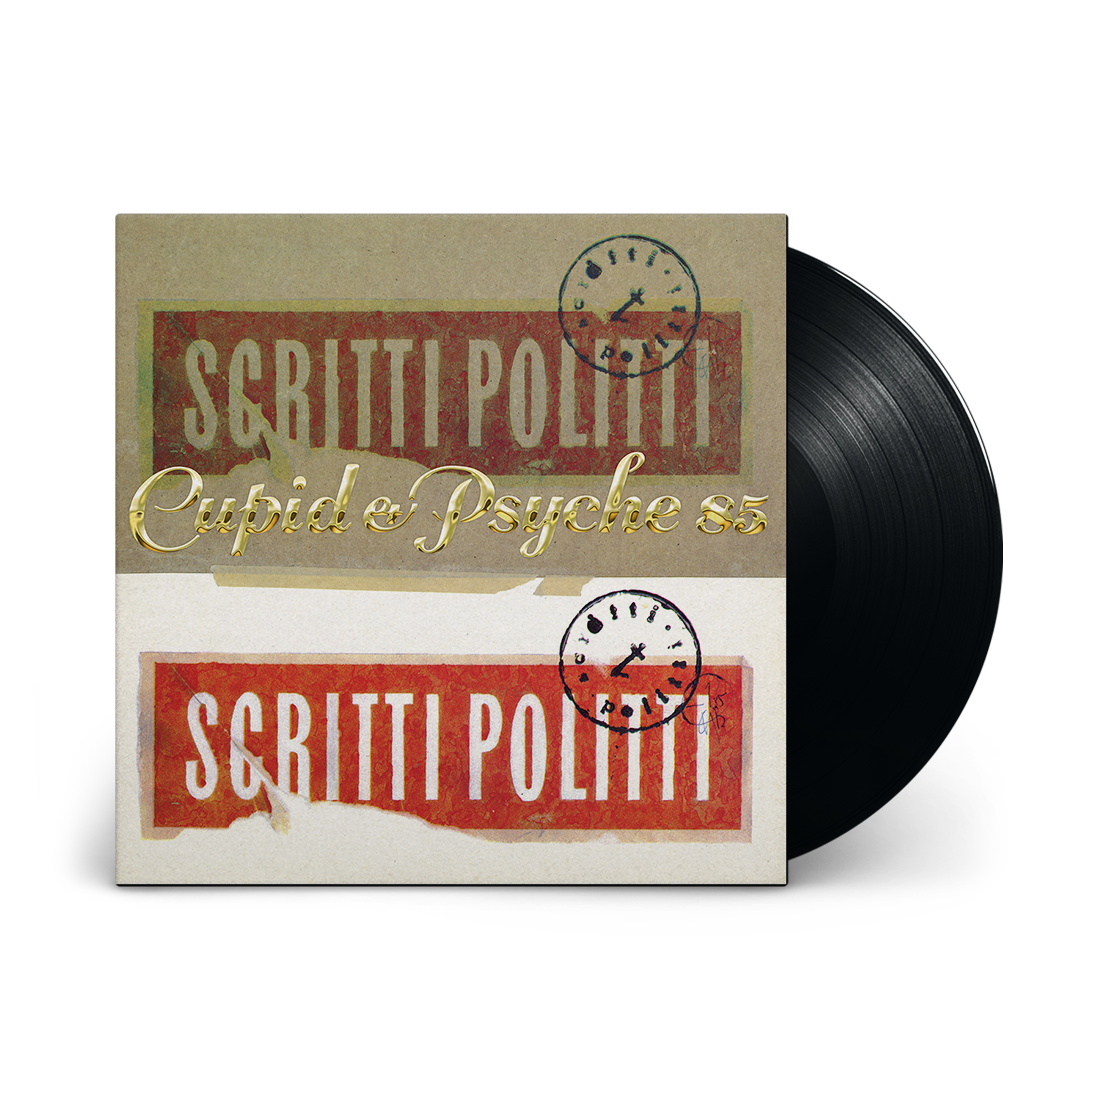 Cupid & Psyche 85: Reissue Vinyl LP